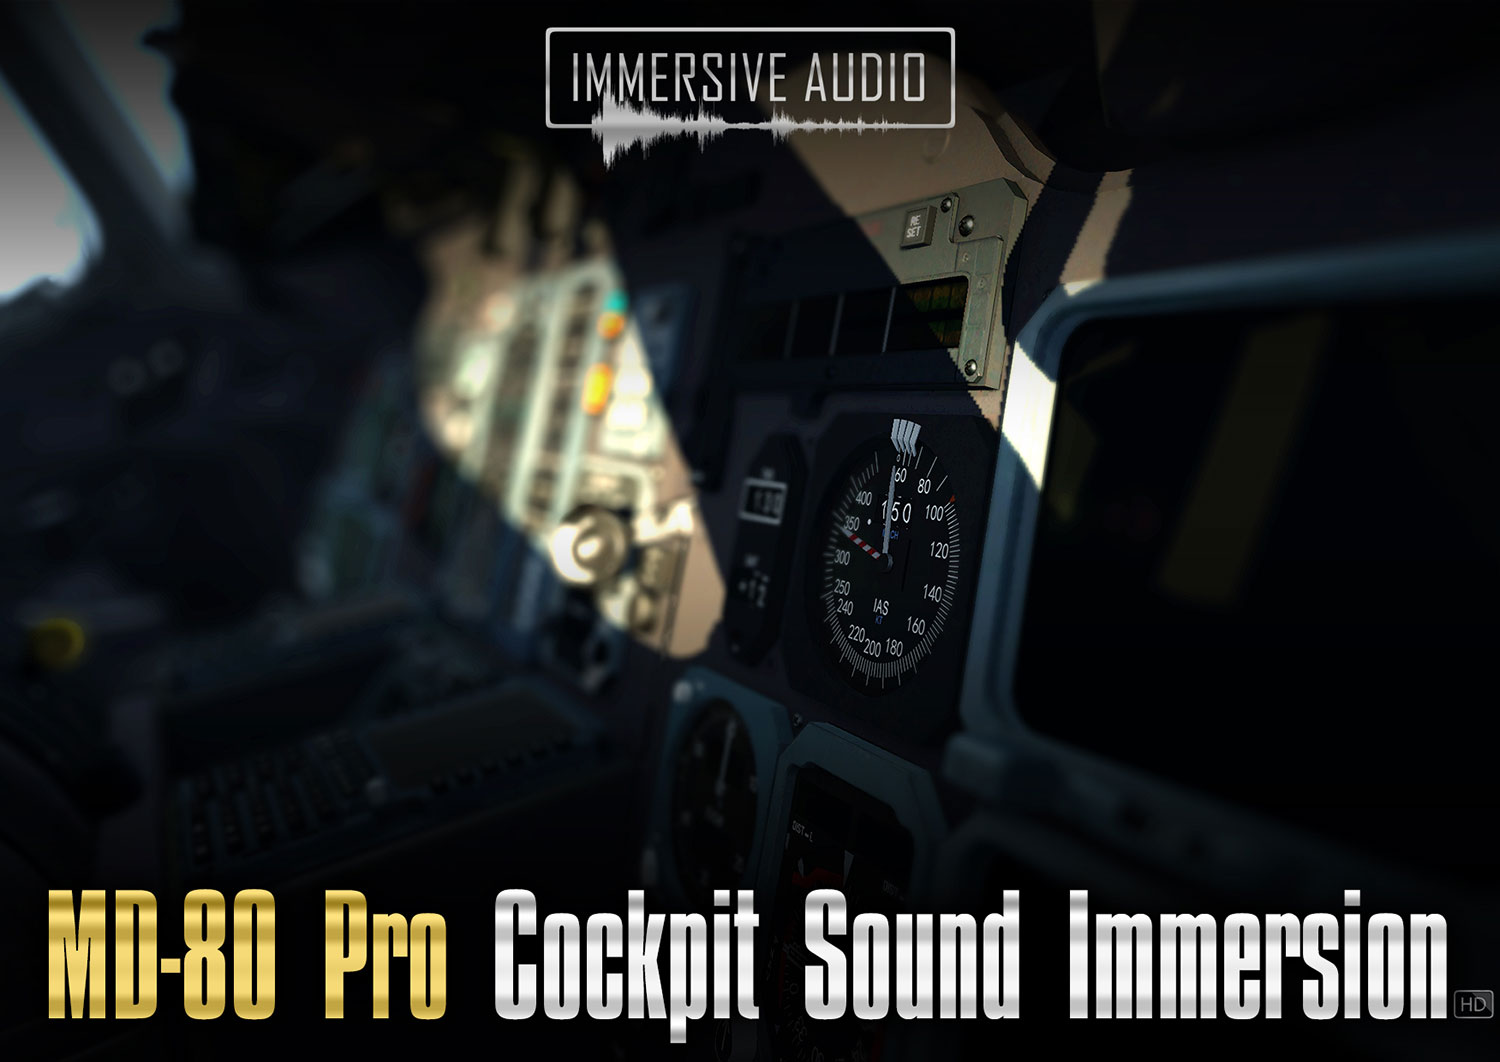 Immersive Audio - MD-80 Pro Cockpit Sound Immersion XP